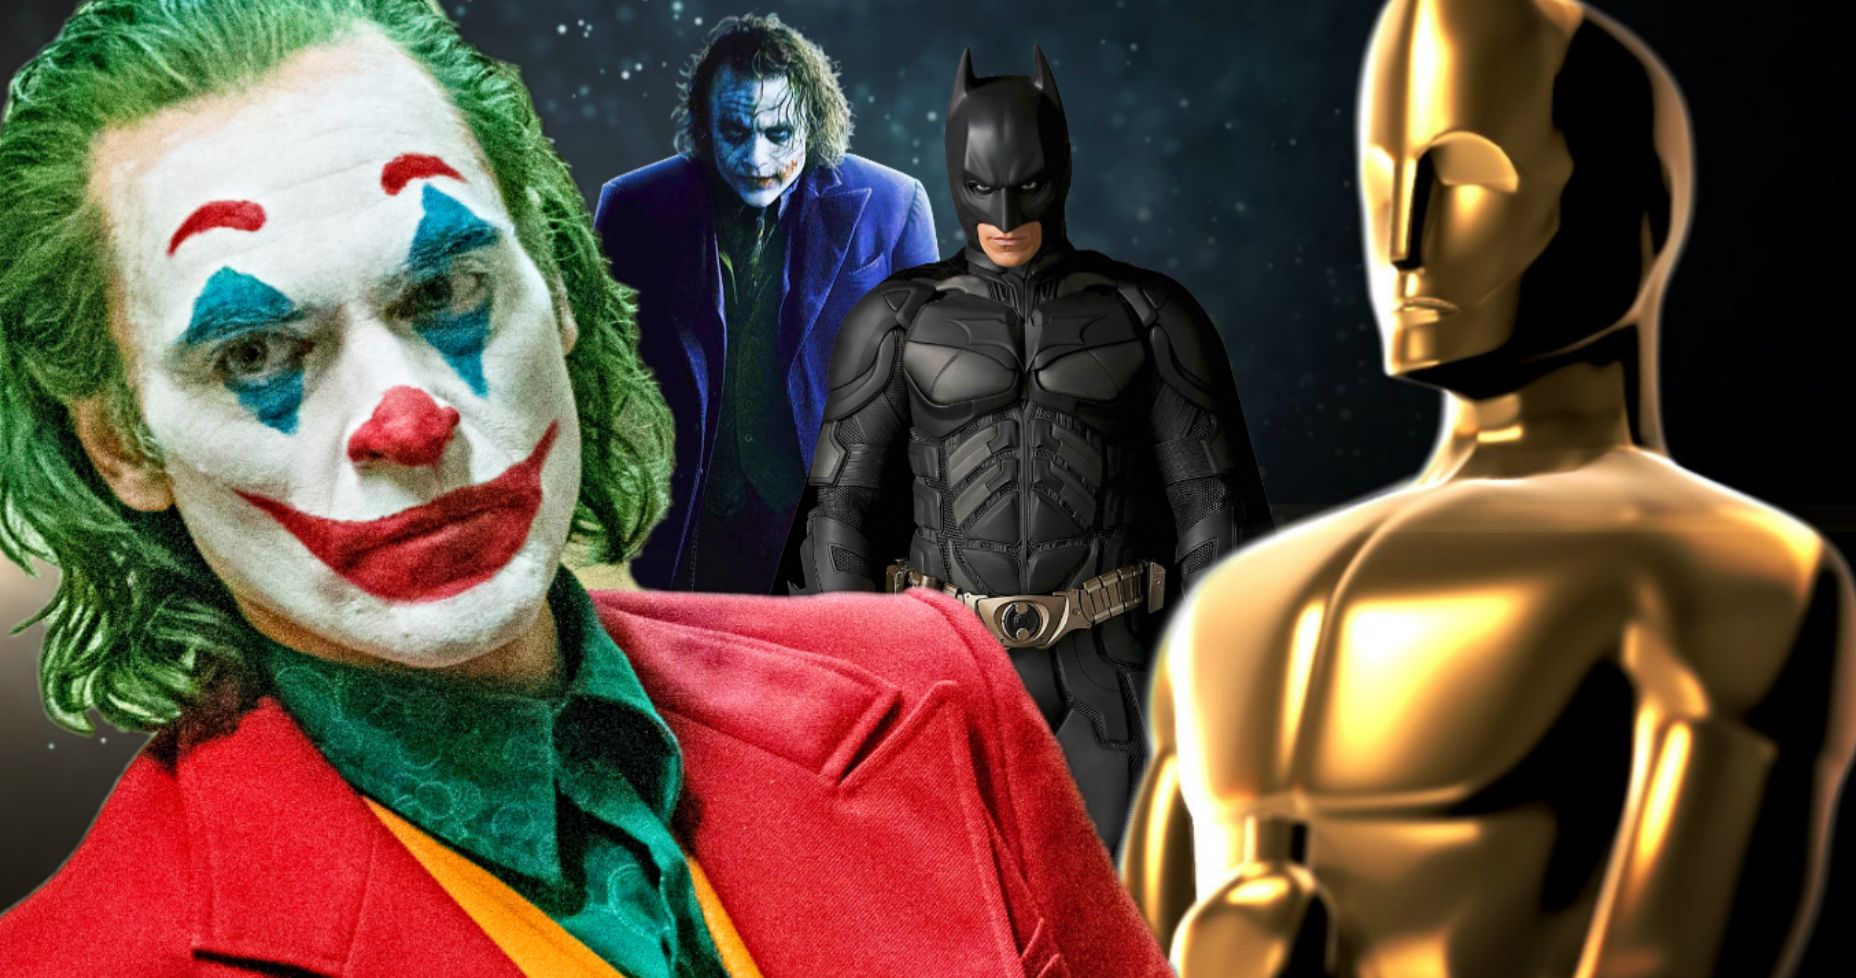 Joker Beats The Dark Knight Oscar Nominations Record for a Comic Book Movie